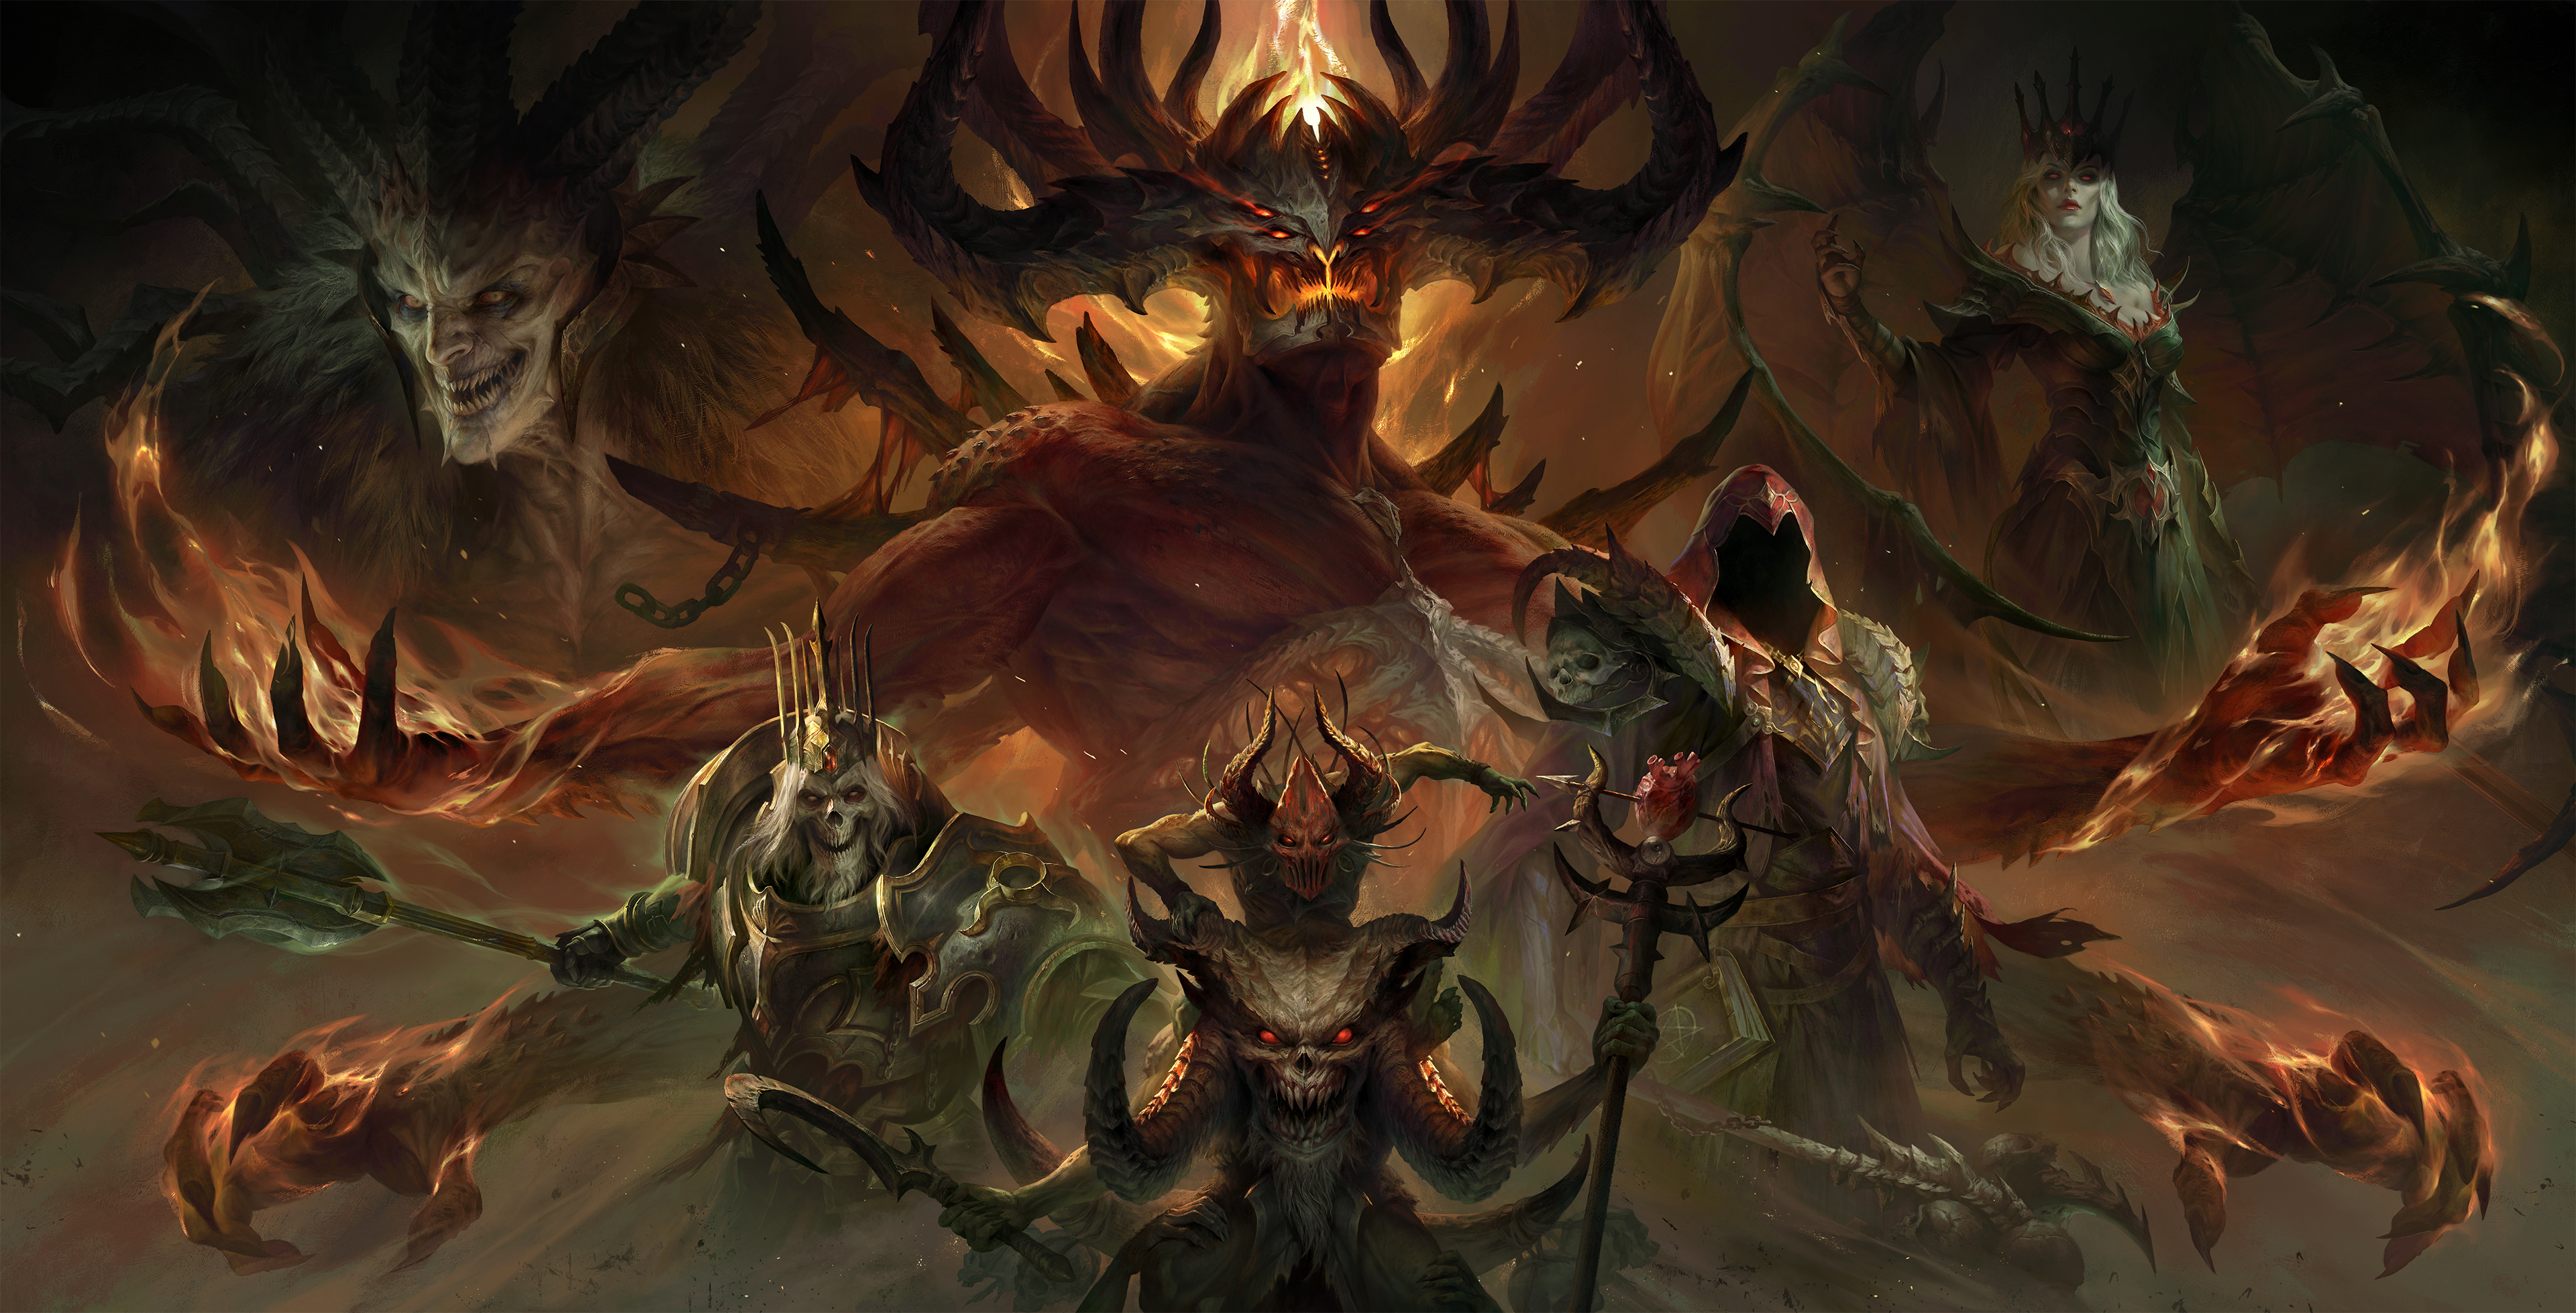 Artwork featuring the various boss demons of Diablo Immortal